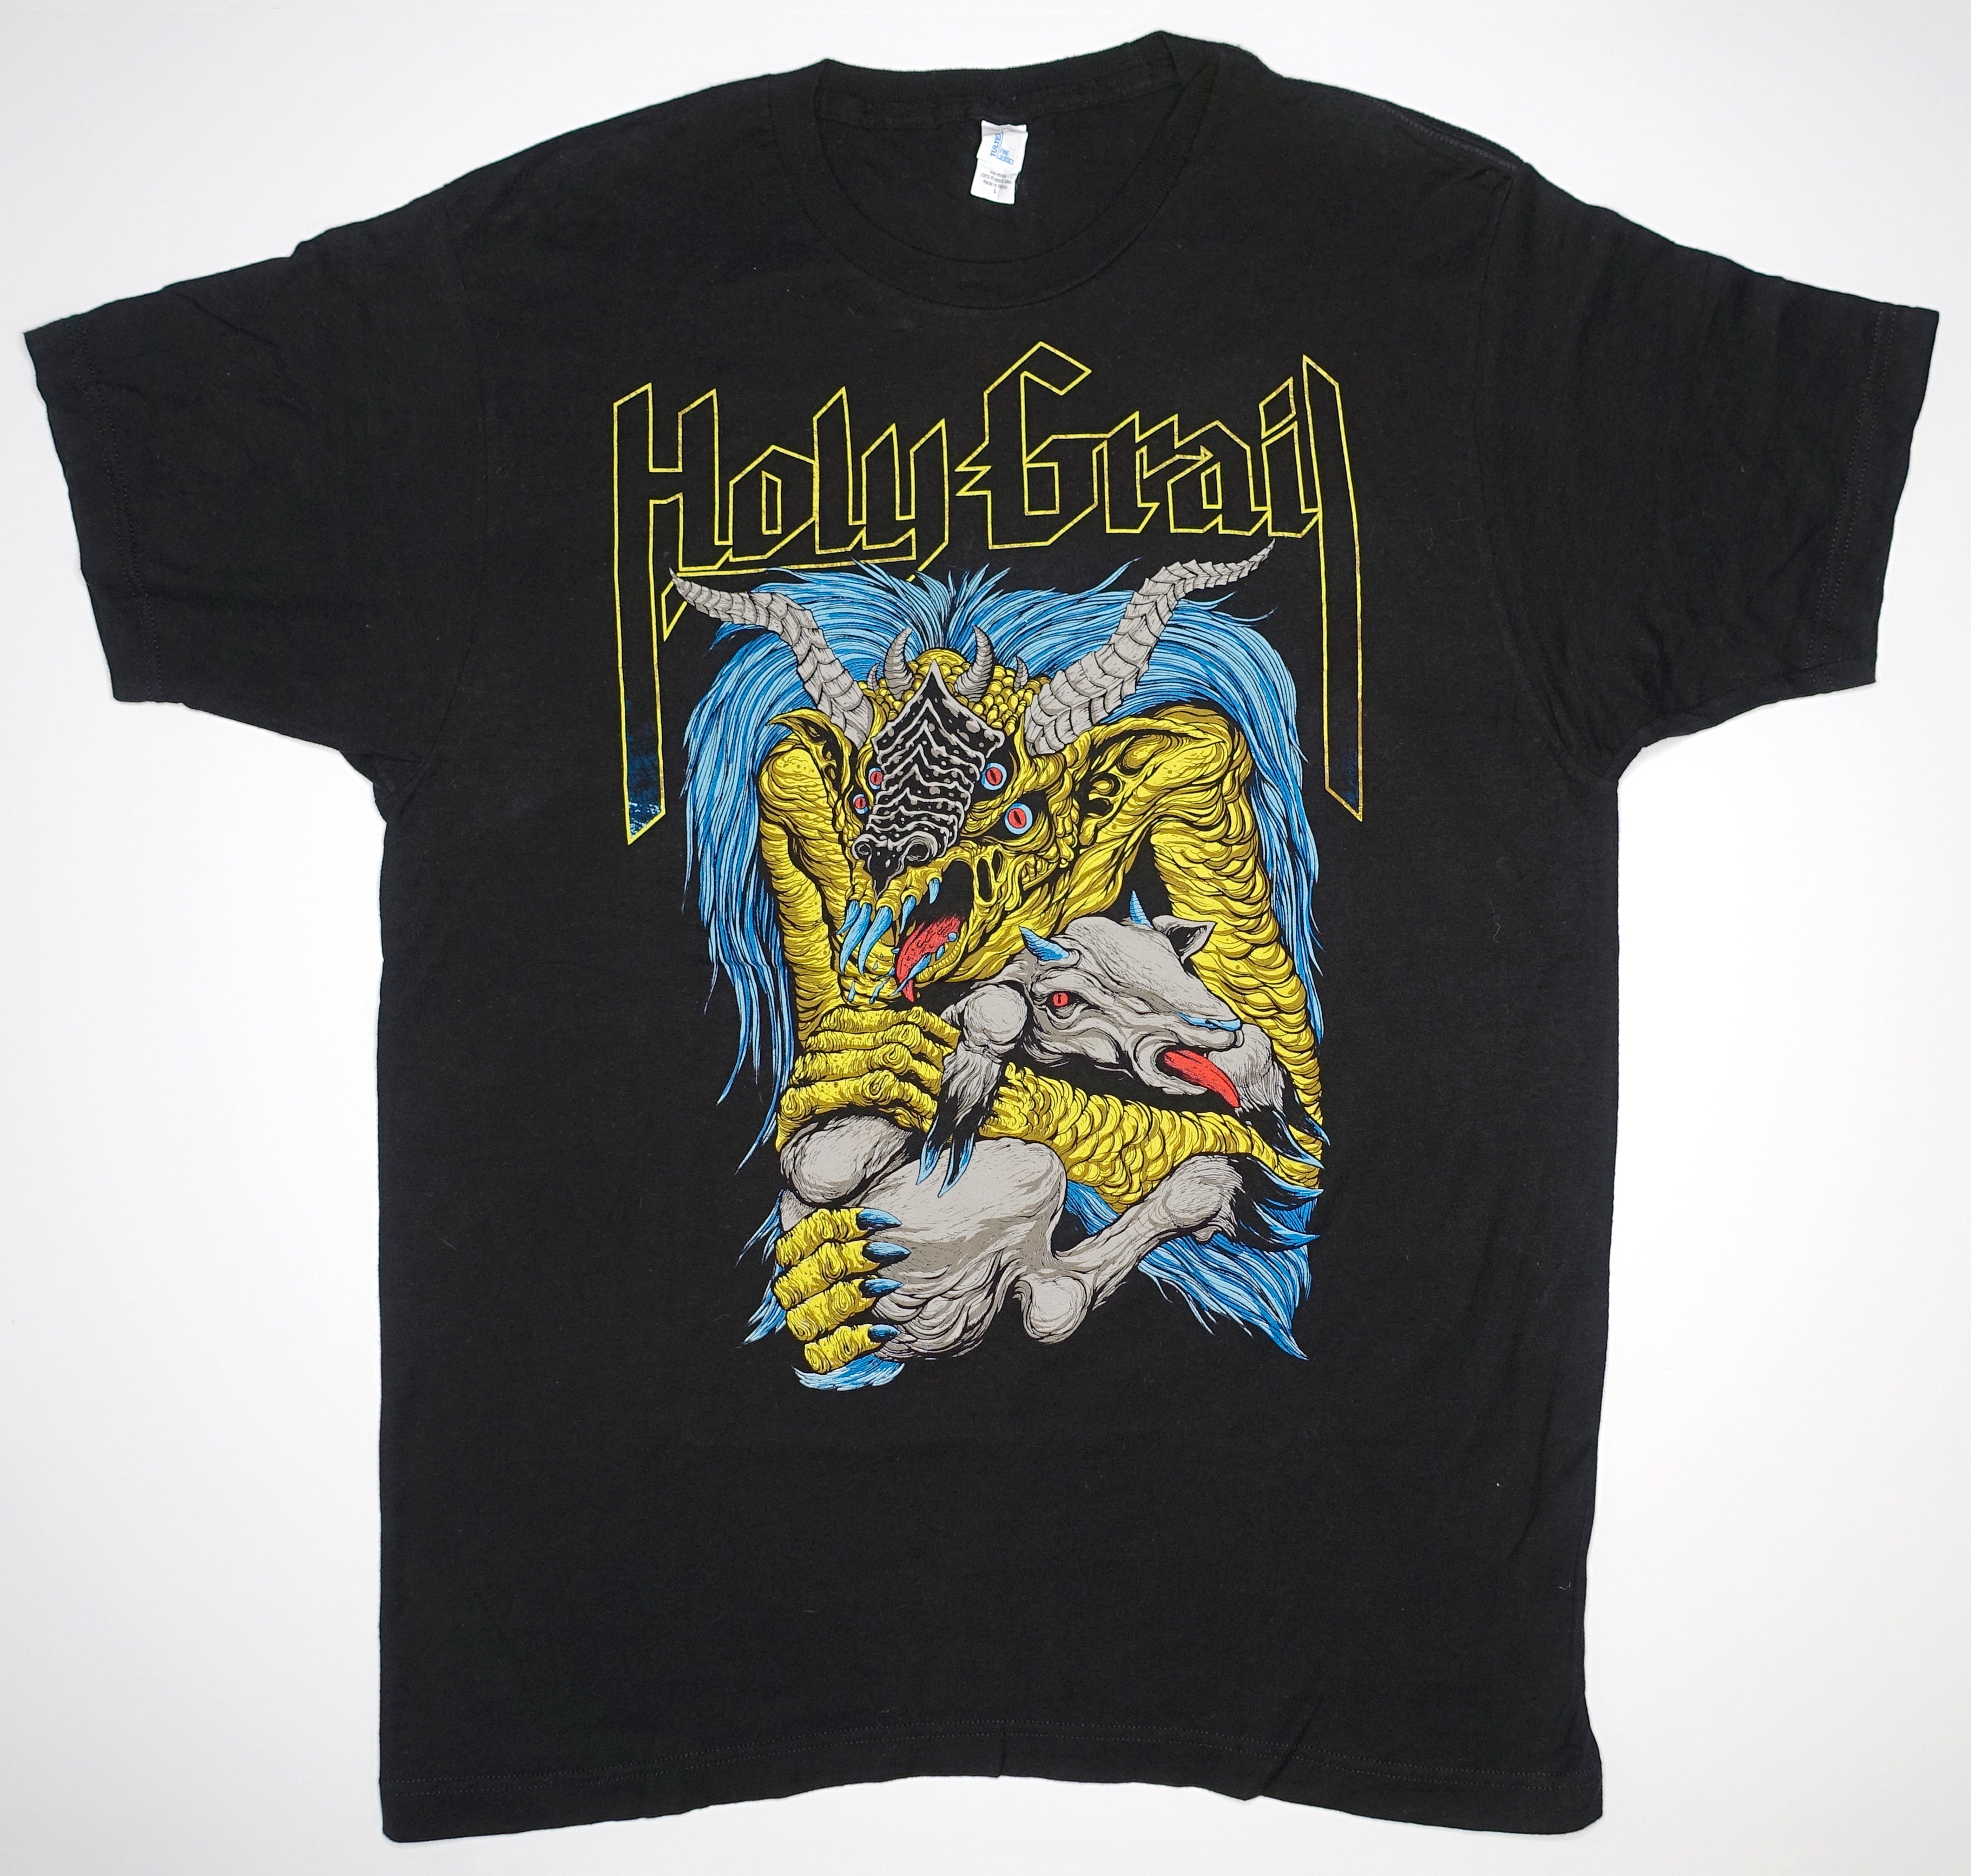 Holy Grail – Goat Demon 2010 Tour Shirt Size Large